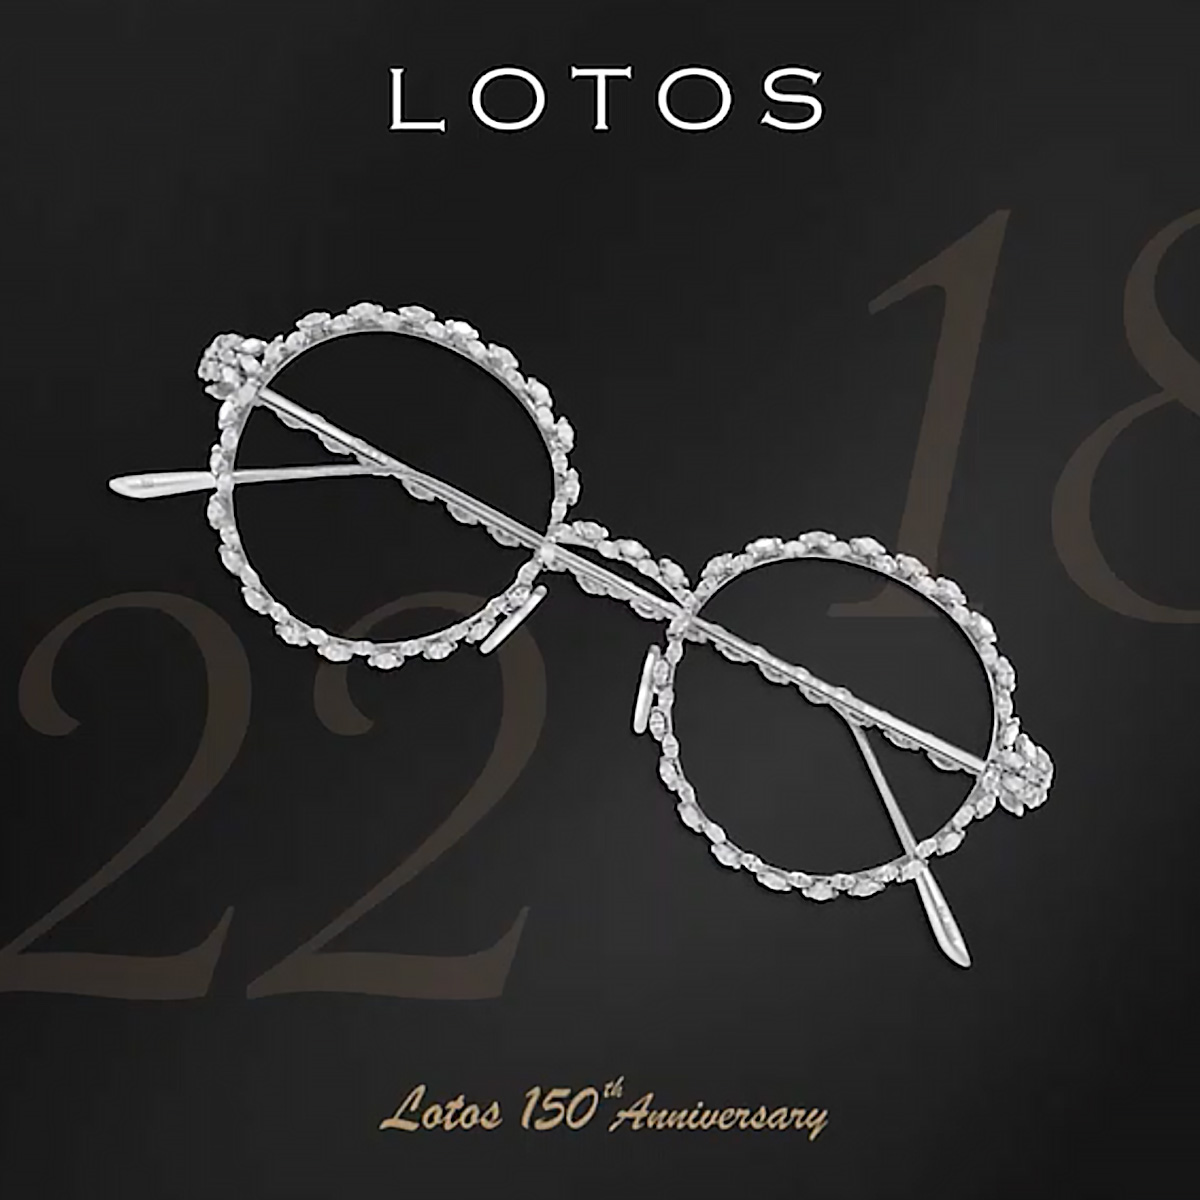 LOTOS - A CELEBRATION OF 150-YEAR MILESTONE